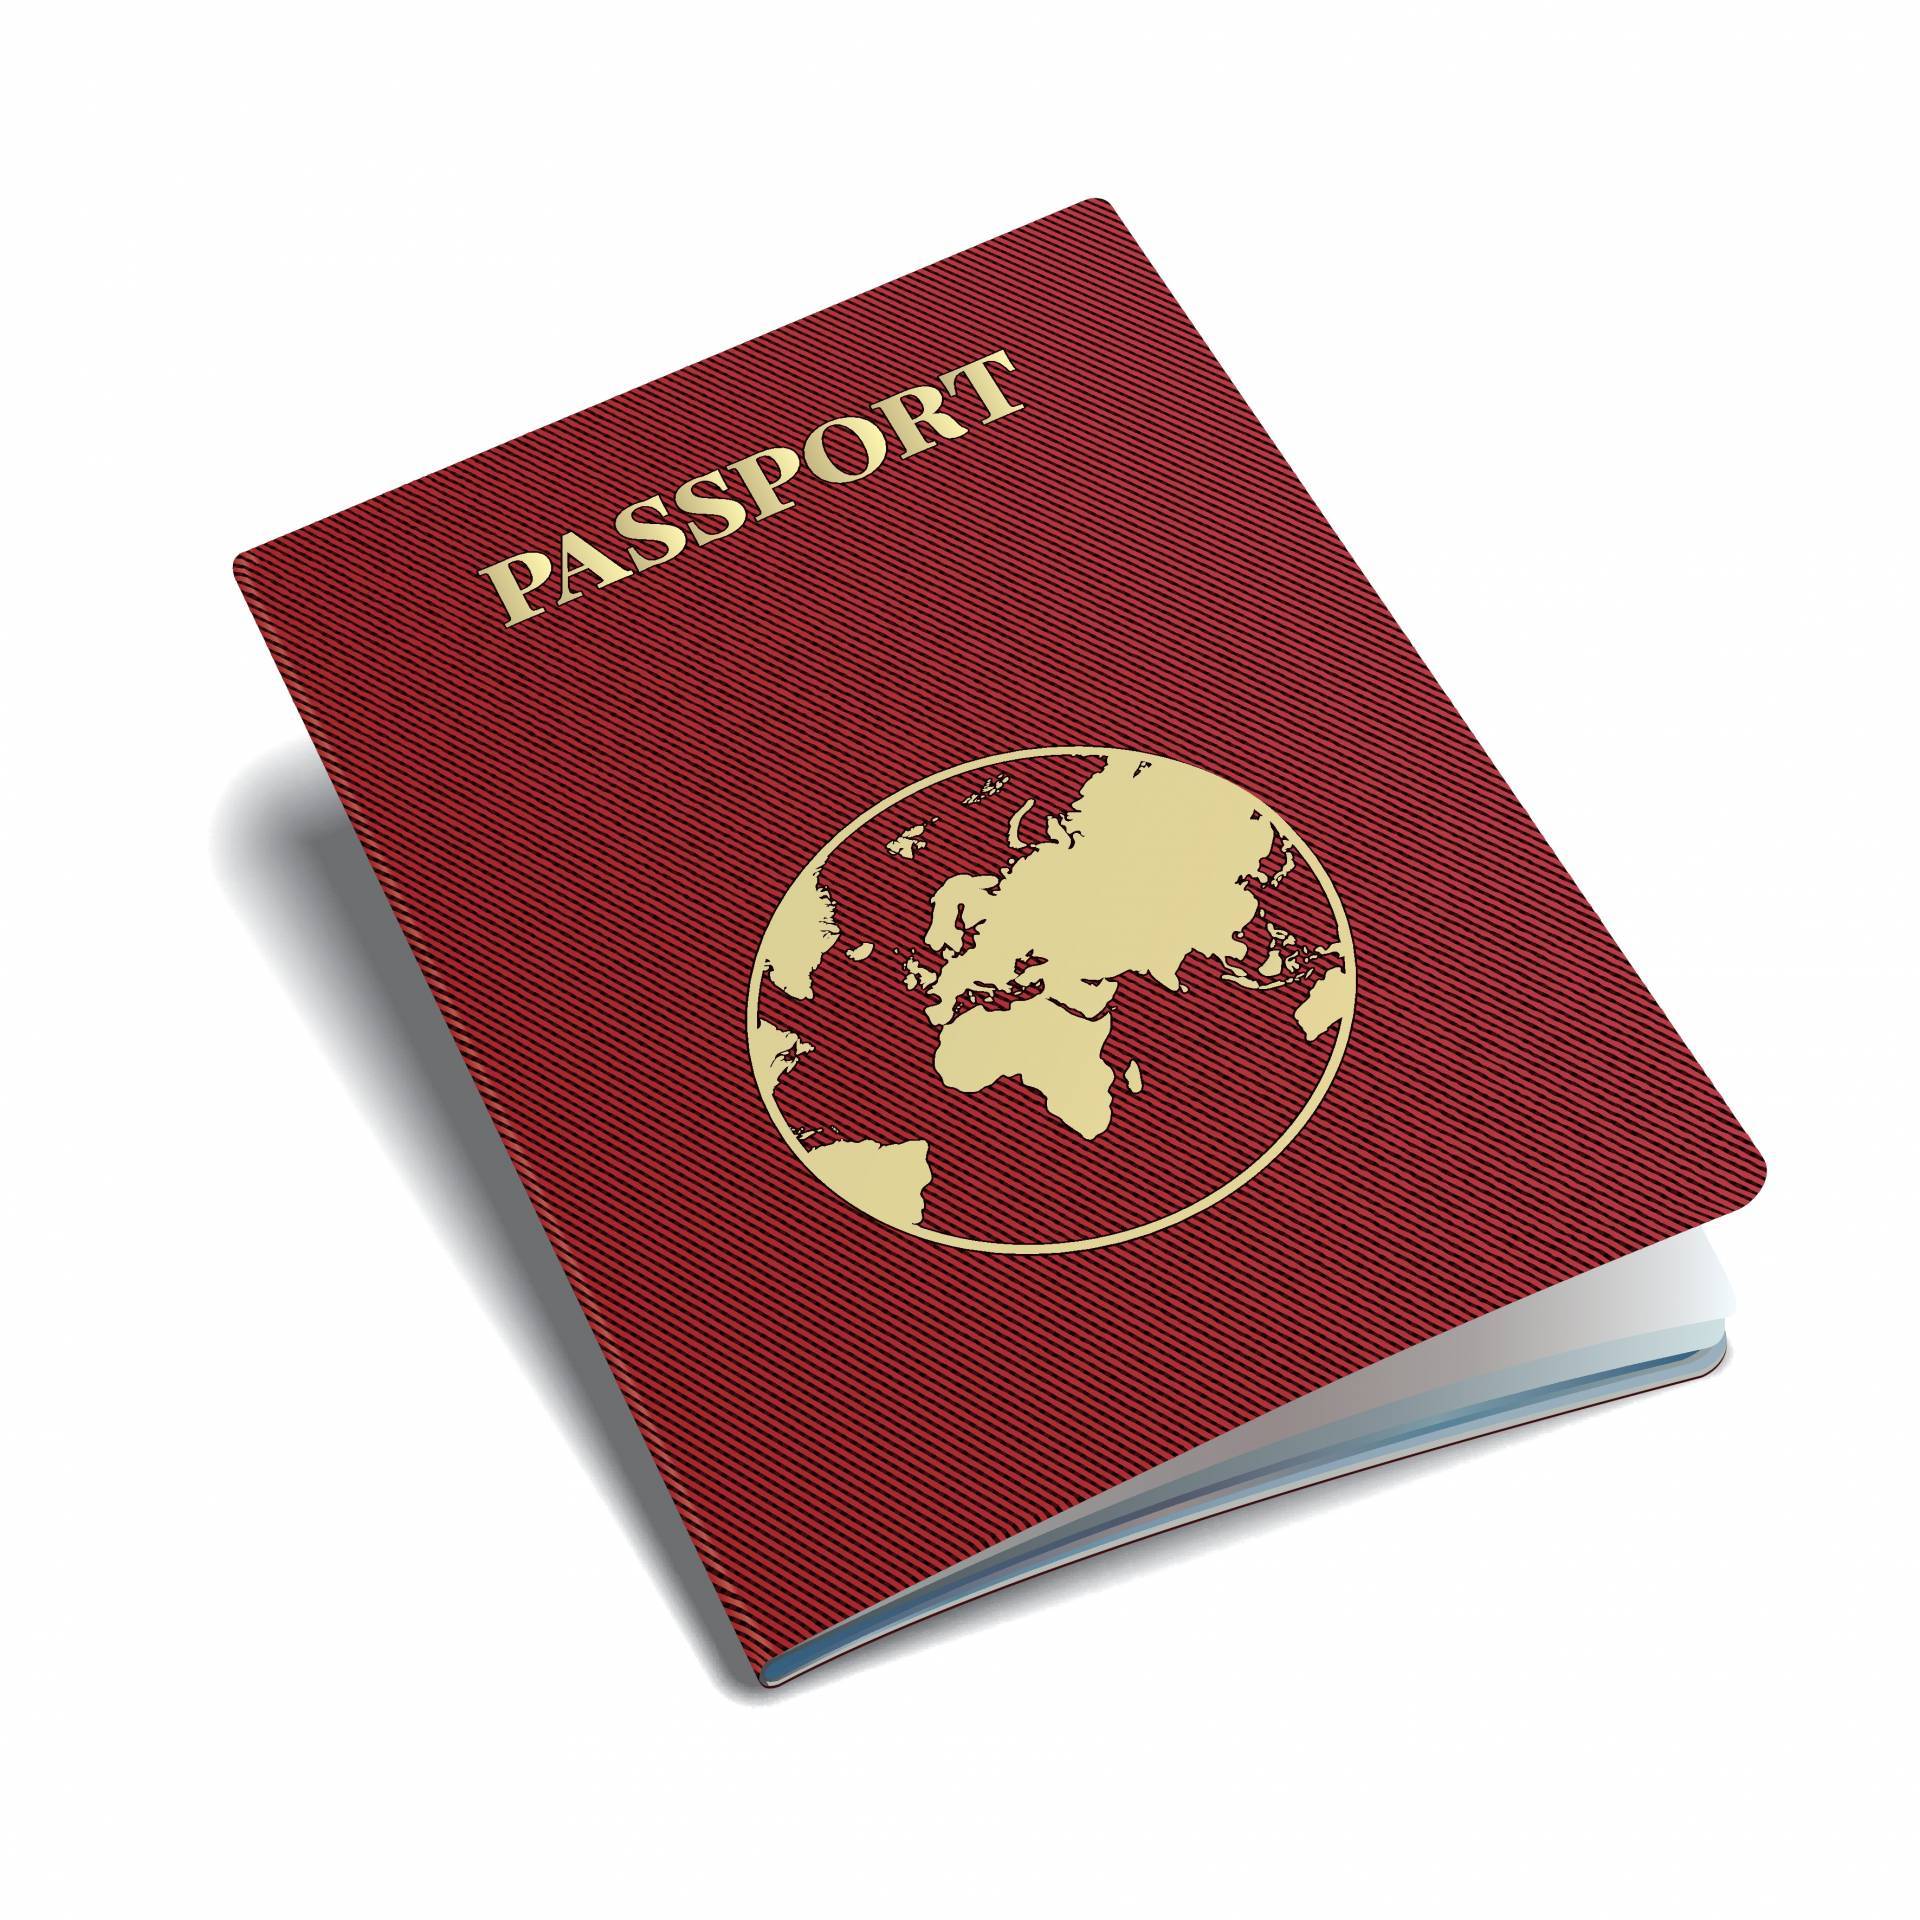 Passport. Foto: Colourbox